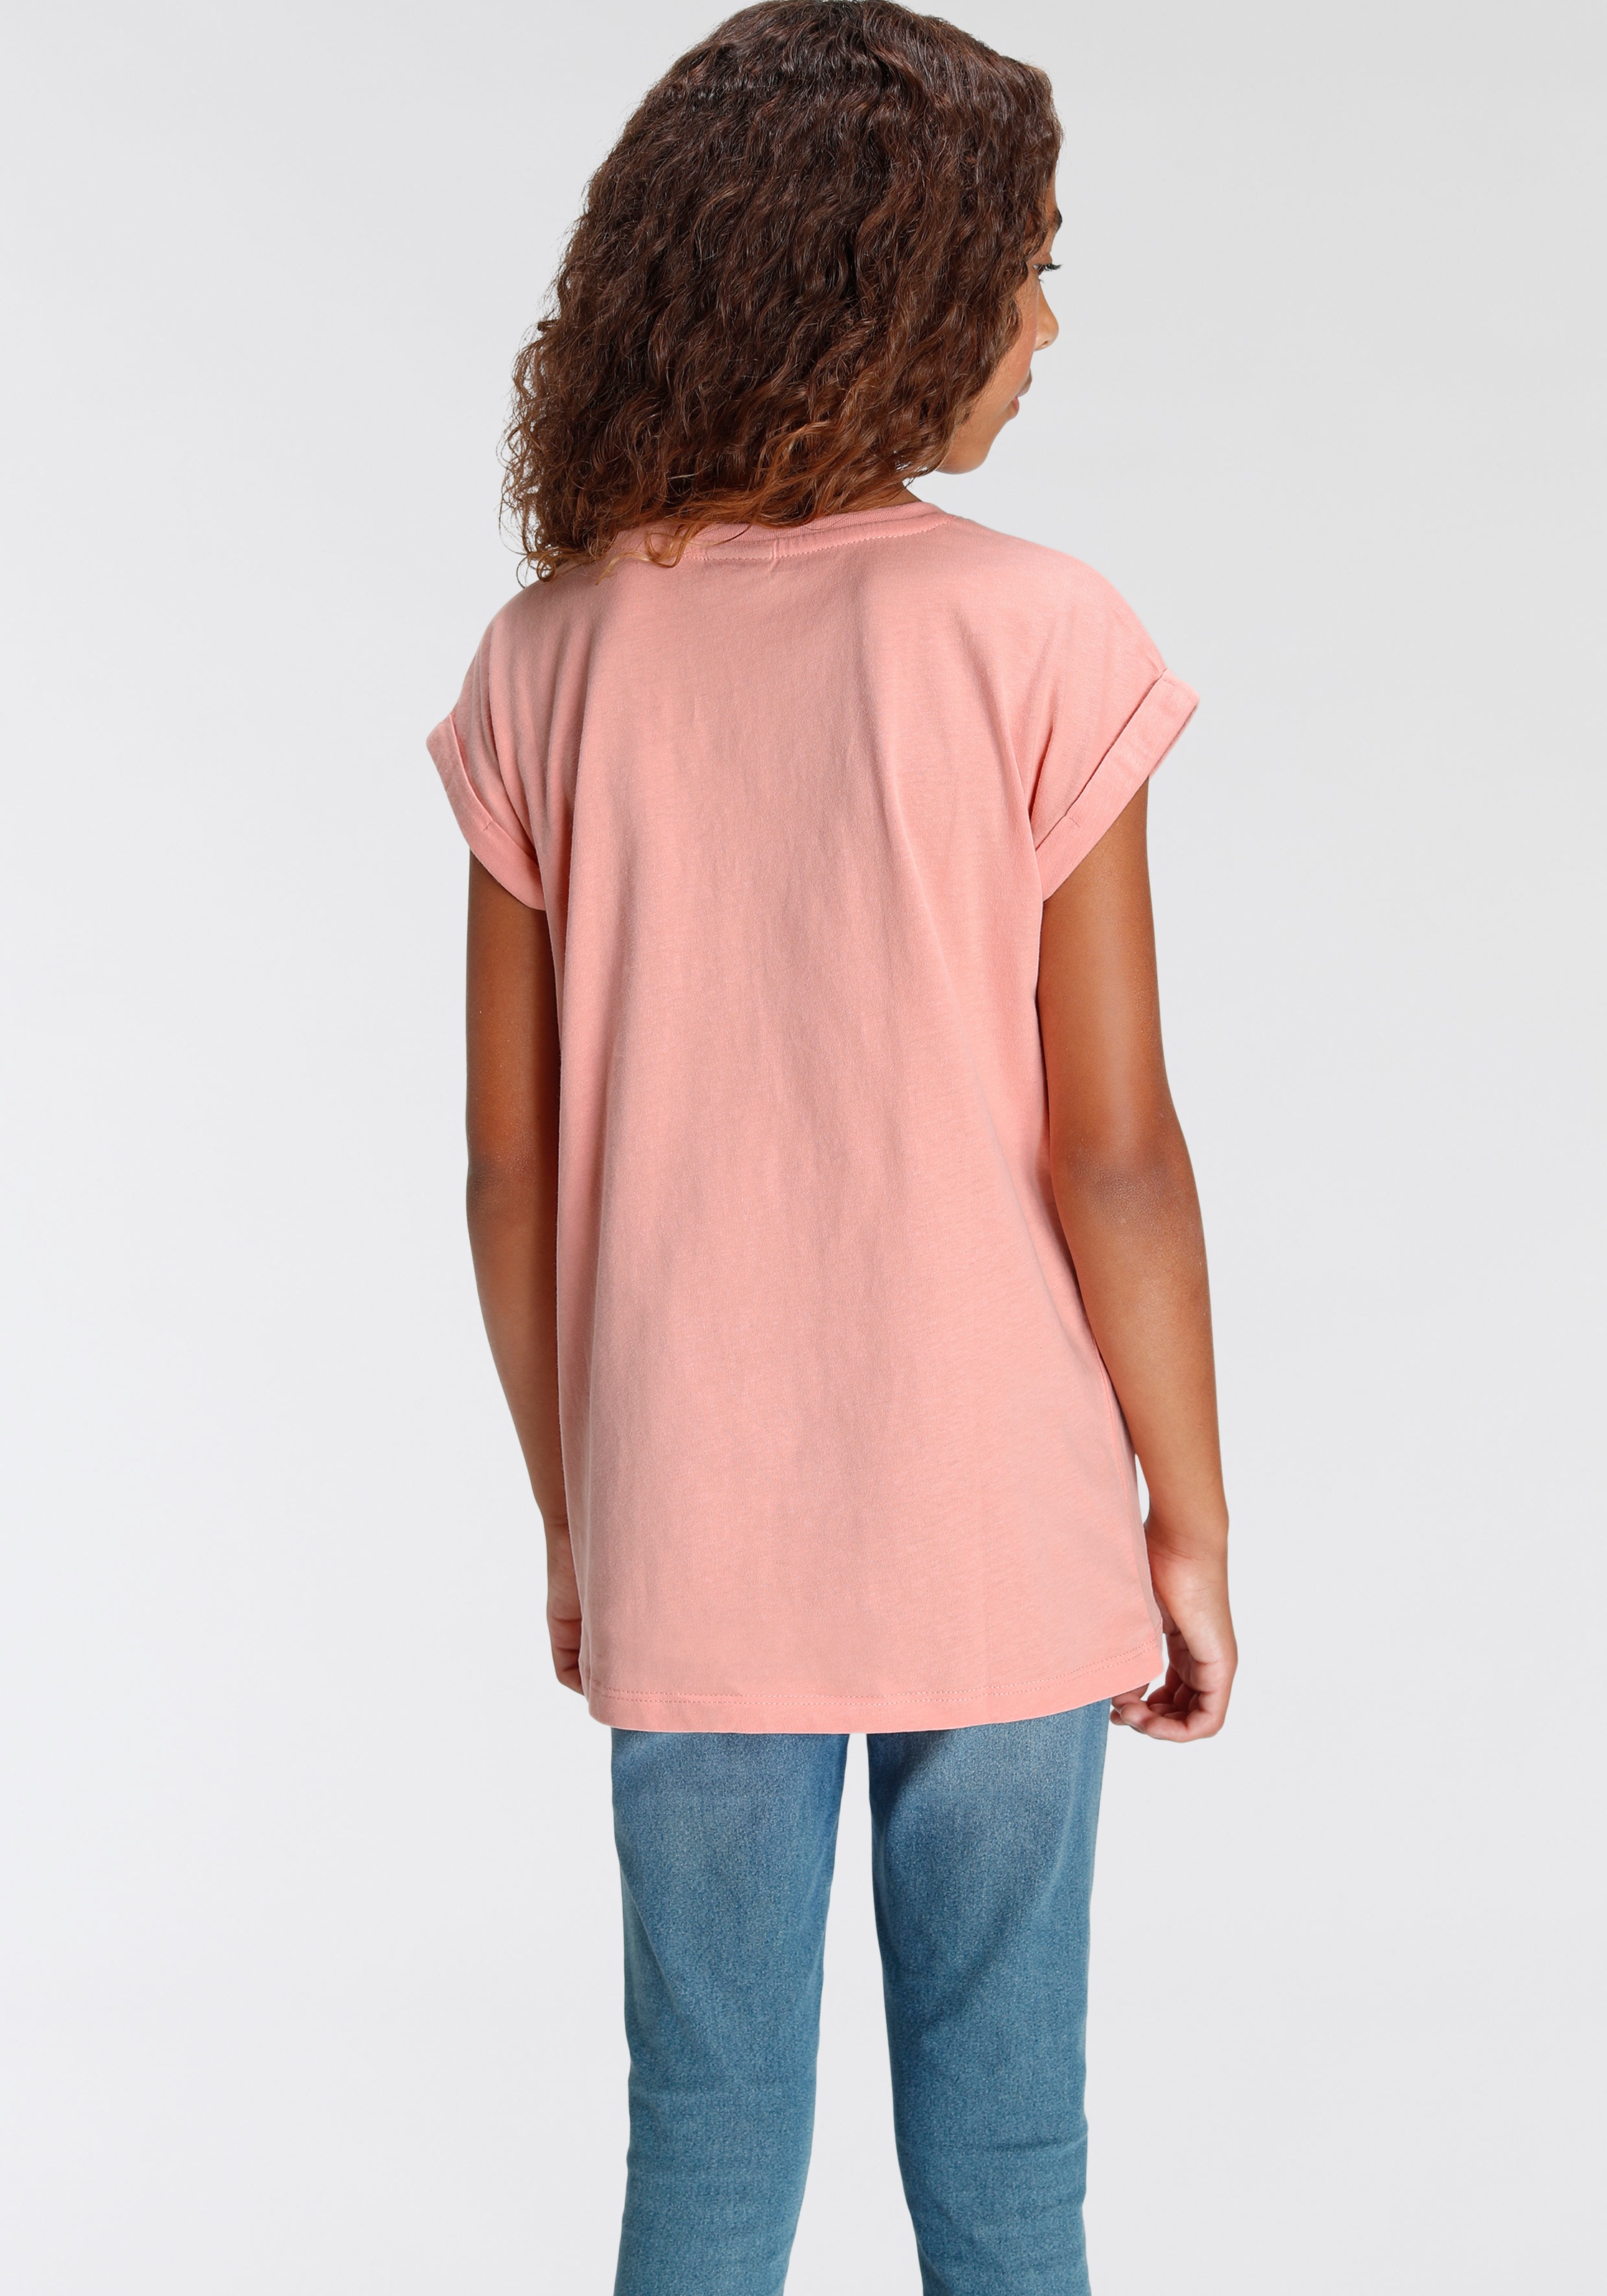 KIDSWORLD T-Shirt »Be in legerer kaufen fabulous«, bei Form OTTO weiter